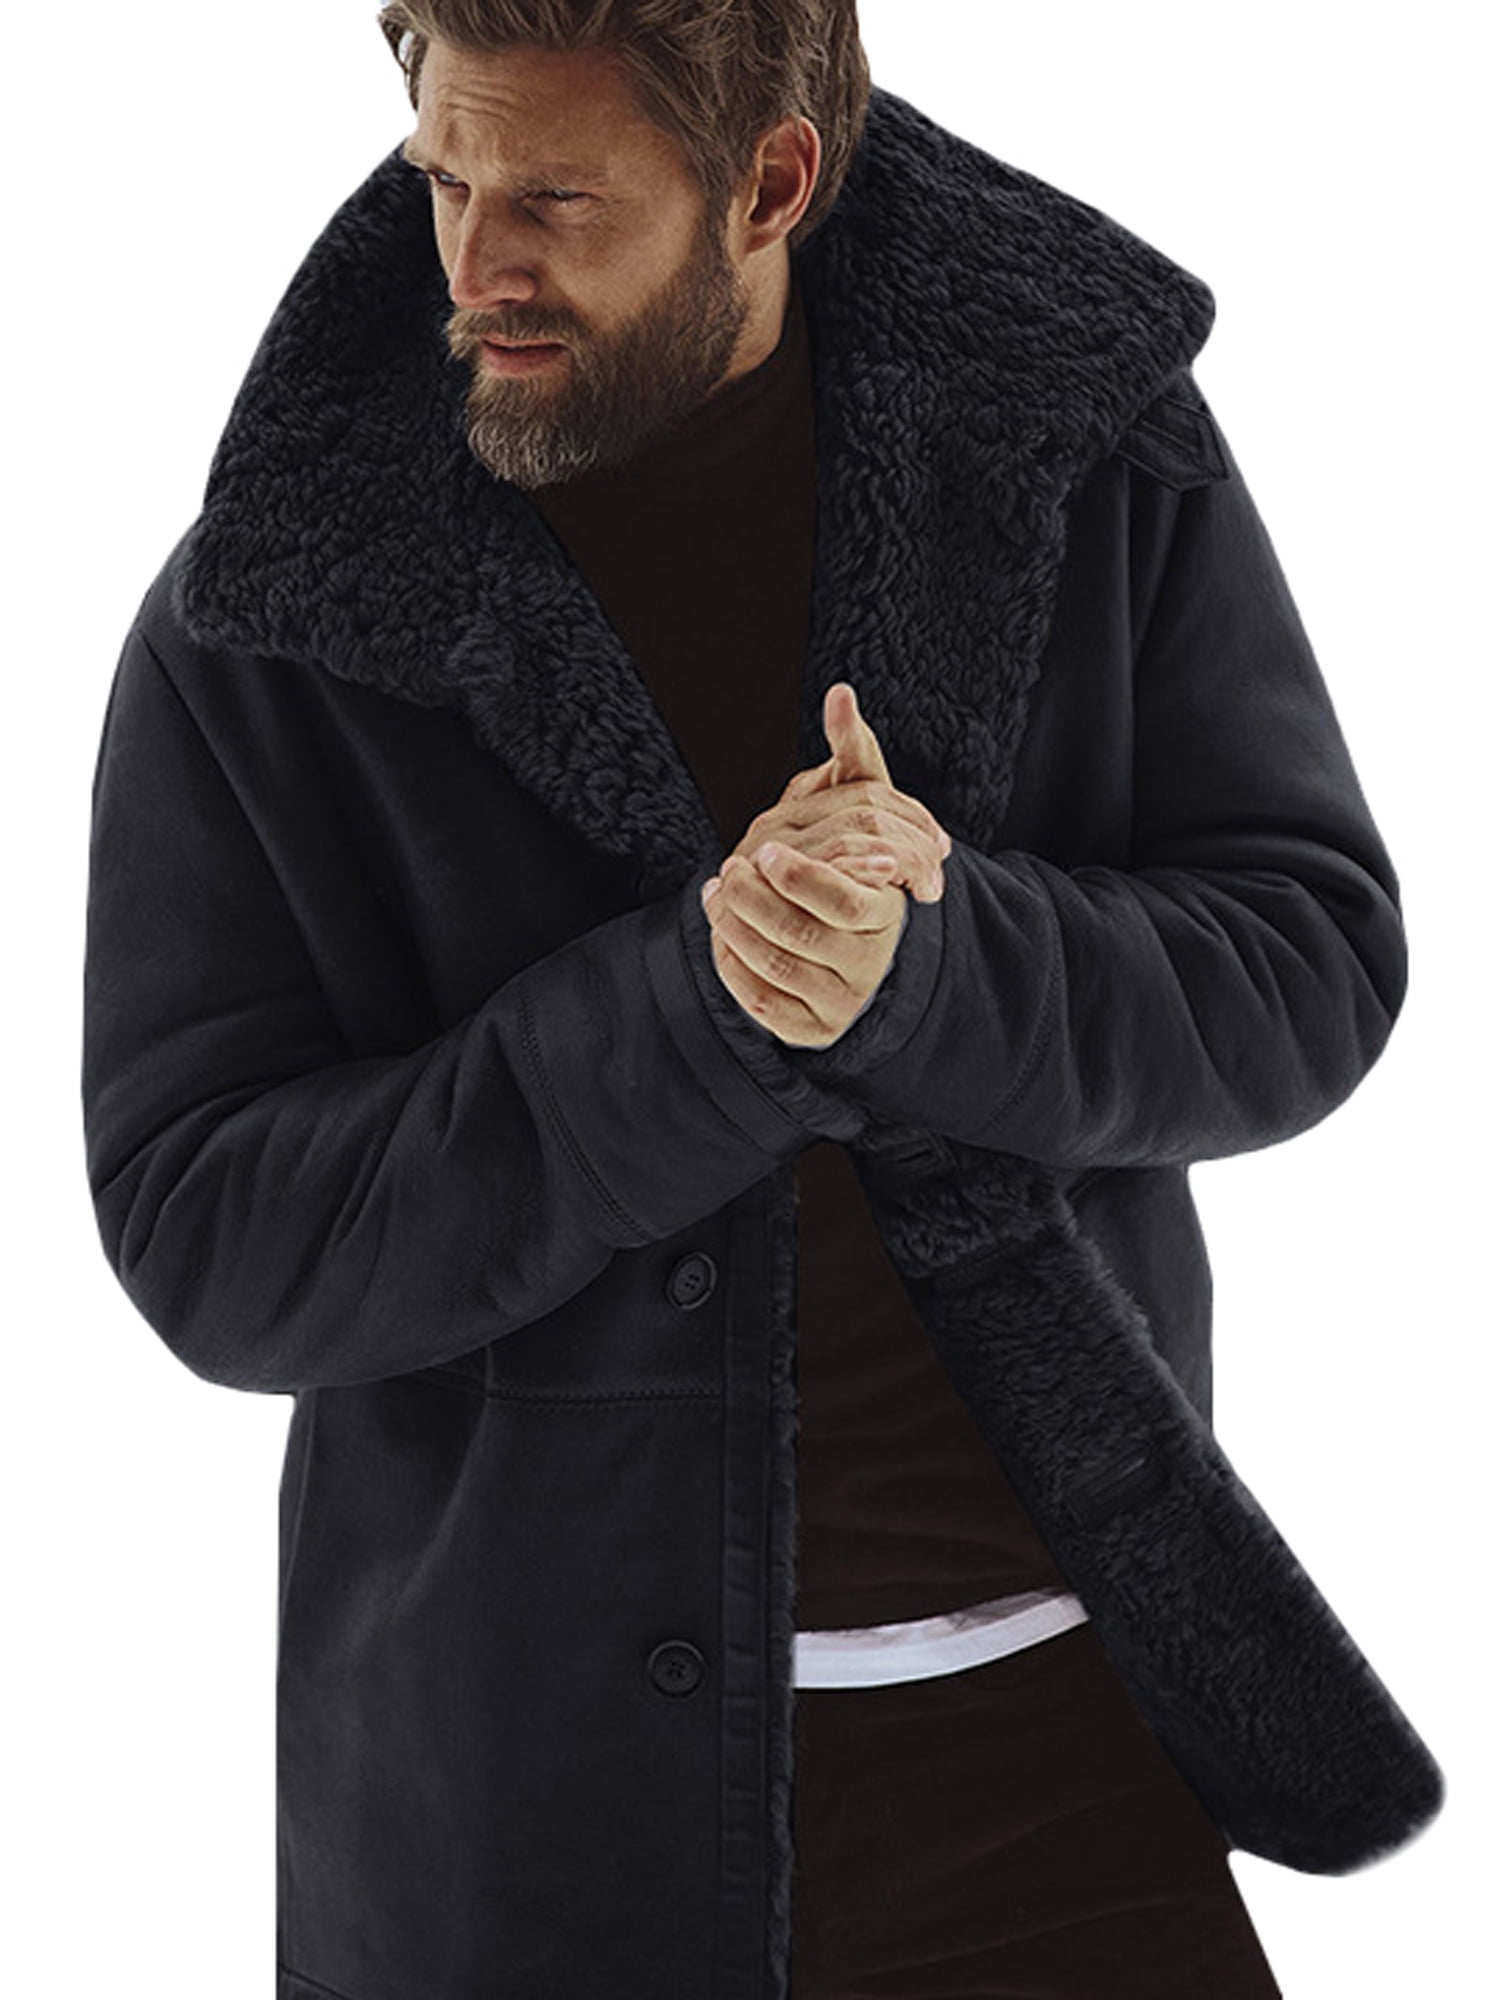 New Winter Jacket Men Thicken Warm fur Hooded parka Coat Fashion Fleece overcoat